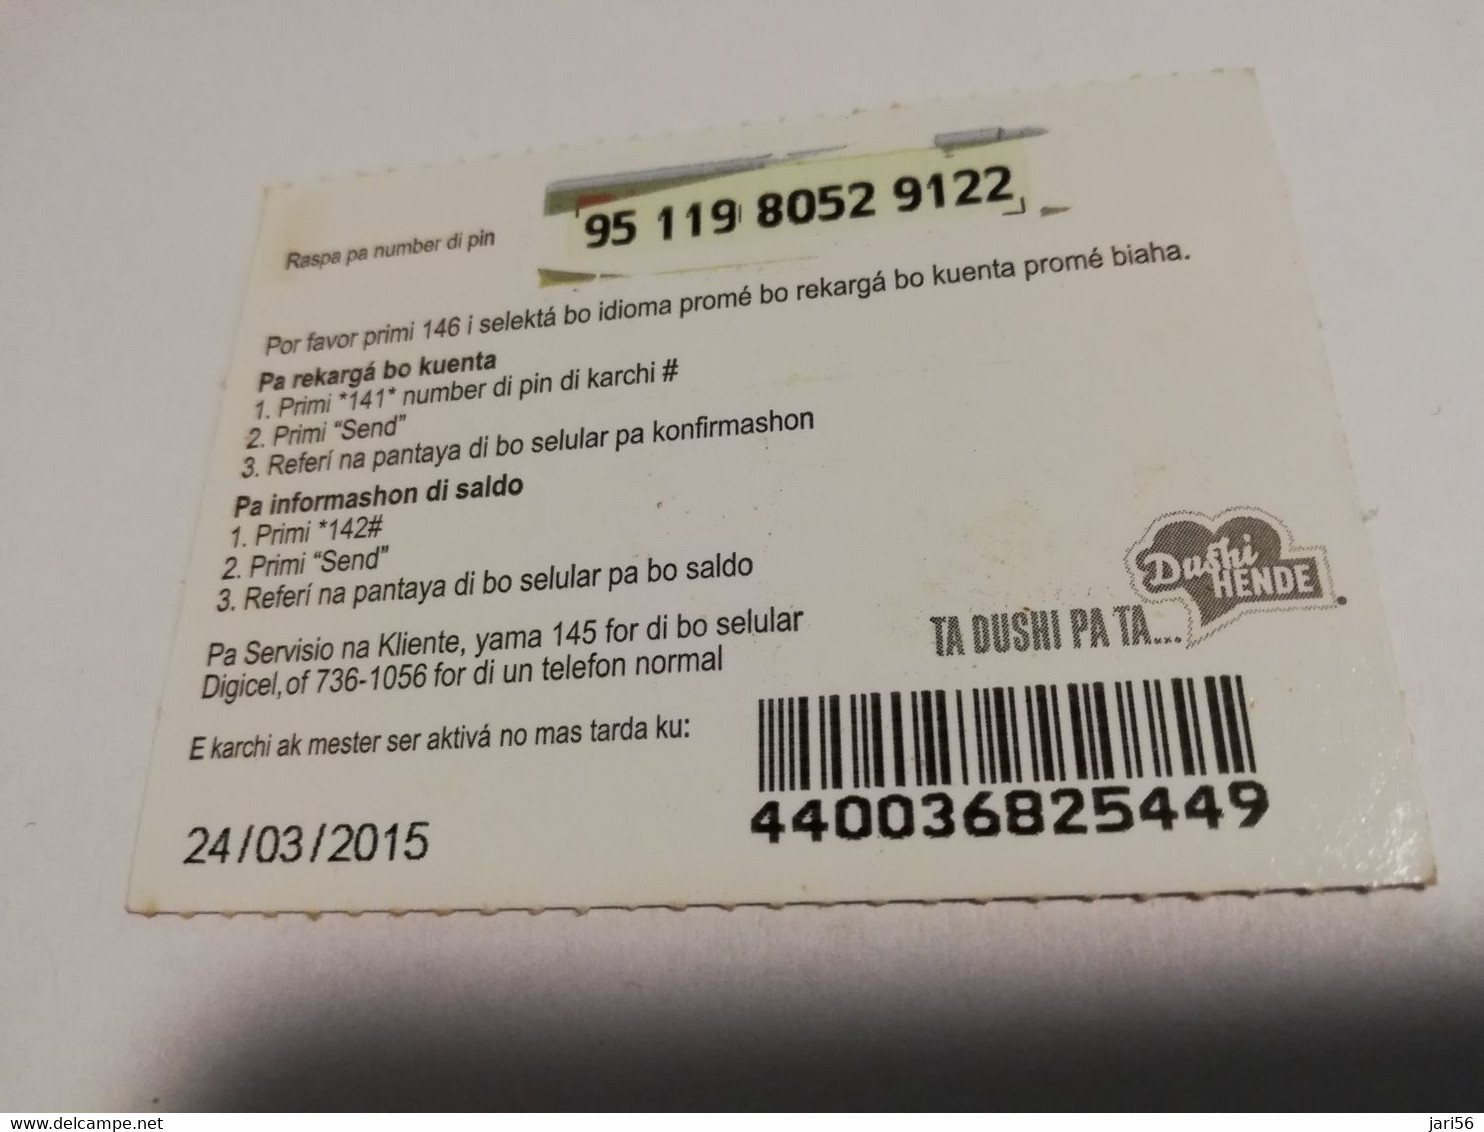 CURACAO NAF 5,- DIGICEL FLEX CARD  FLOATING MARKET CURACAO   24/03/2015   ** 4262** - Antillen (Niederländische)